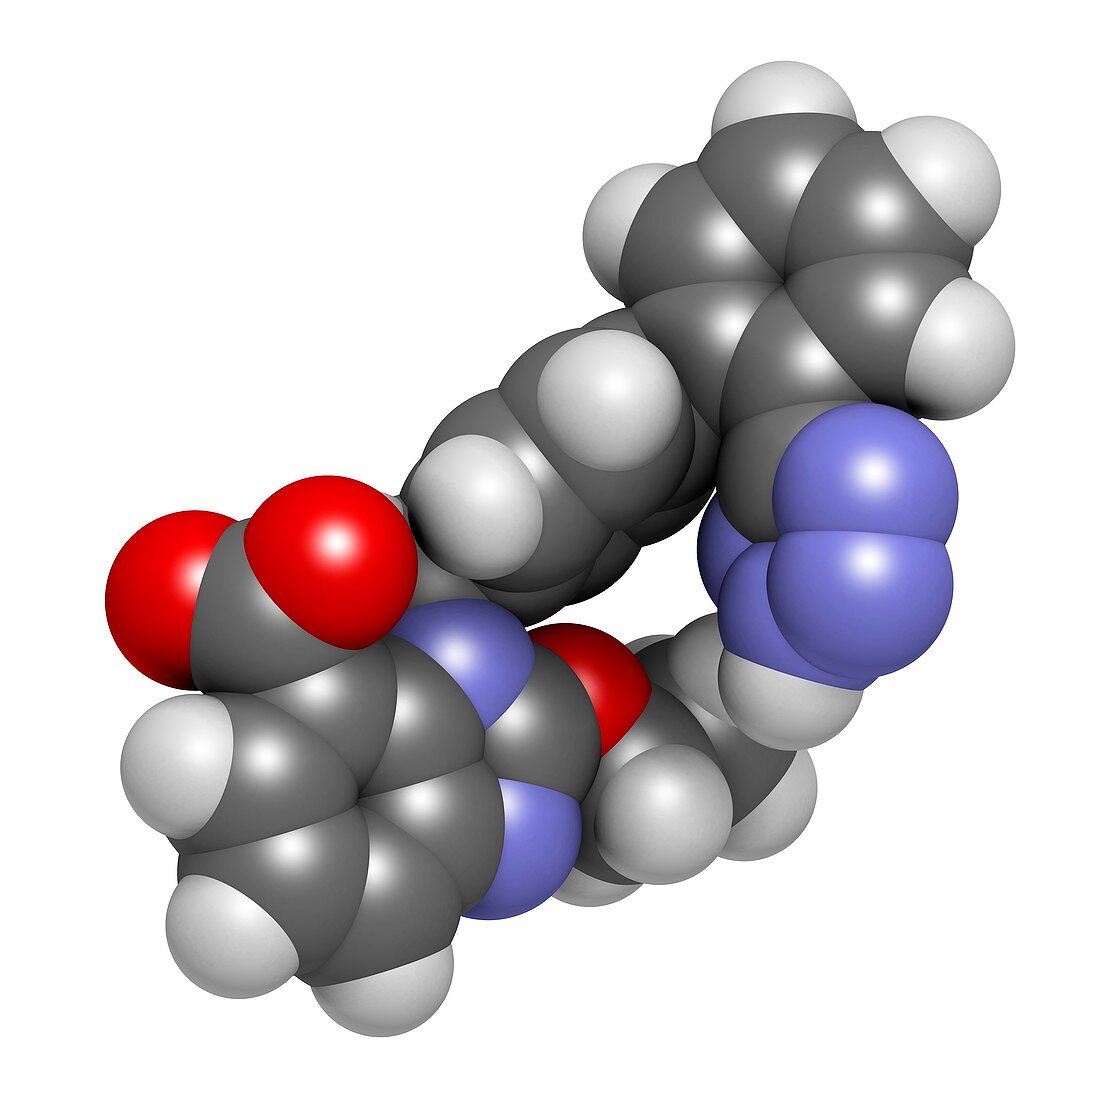 Candesartan hypertension drug molecule